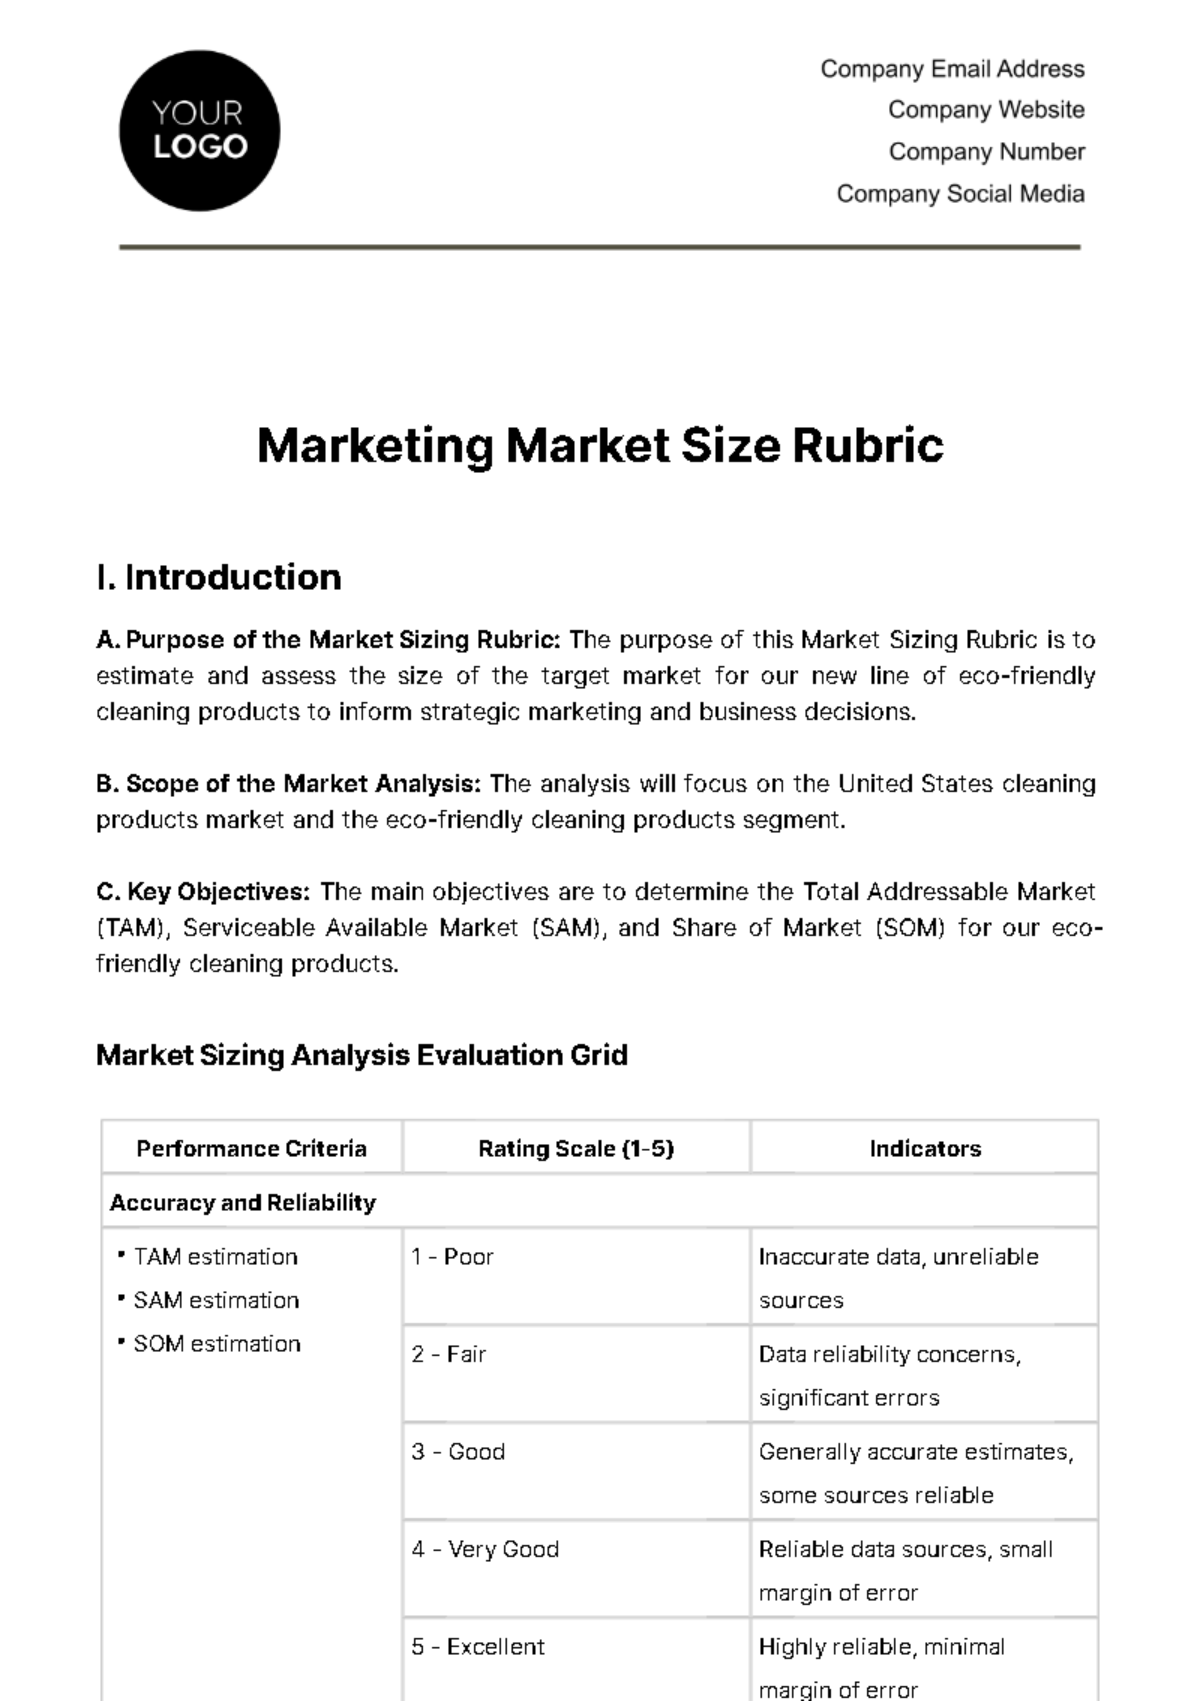 Marketing Market Size Rubric Template